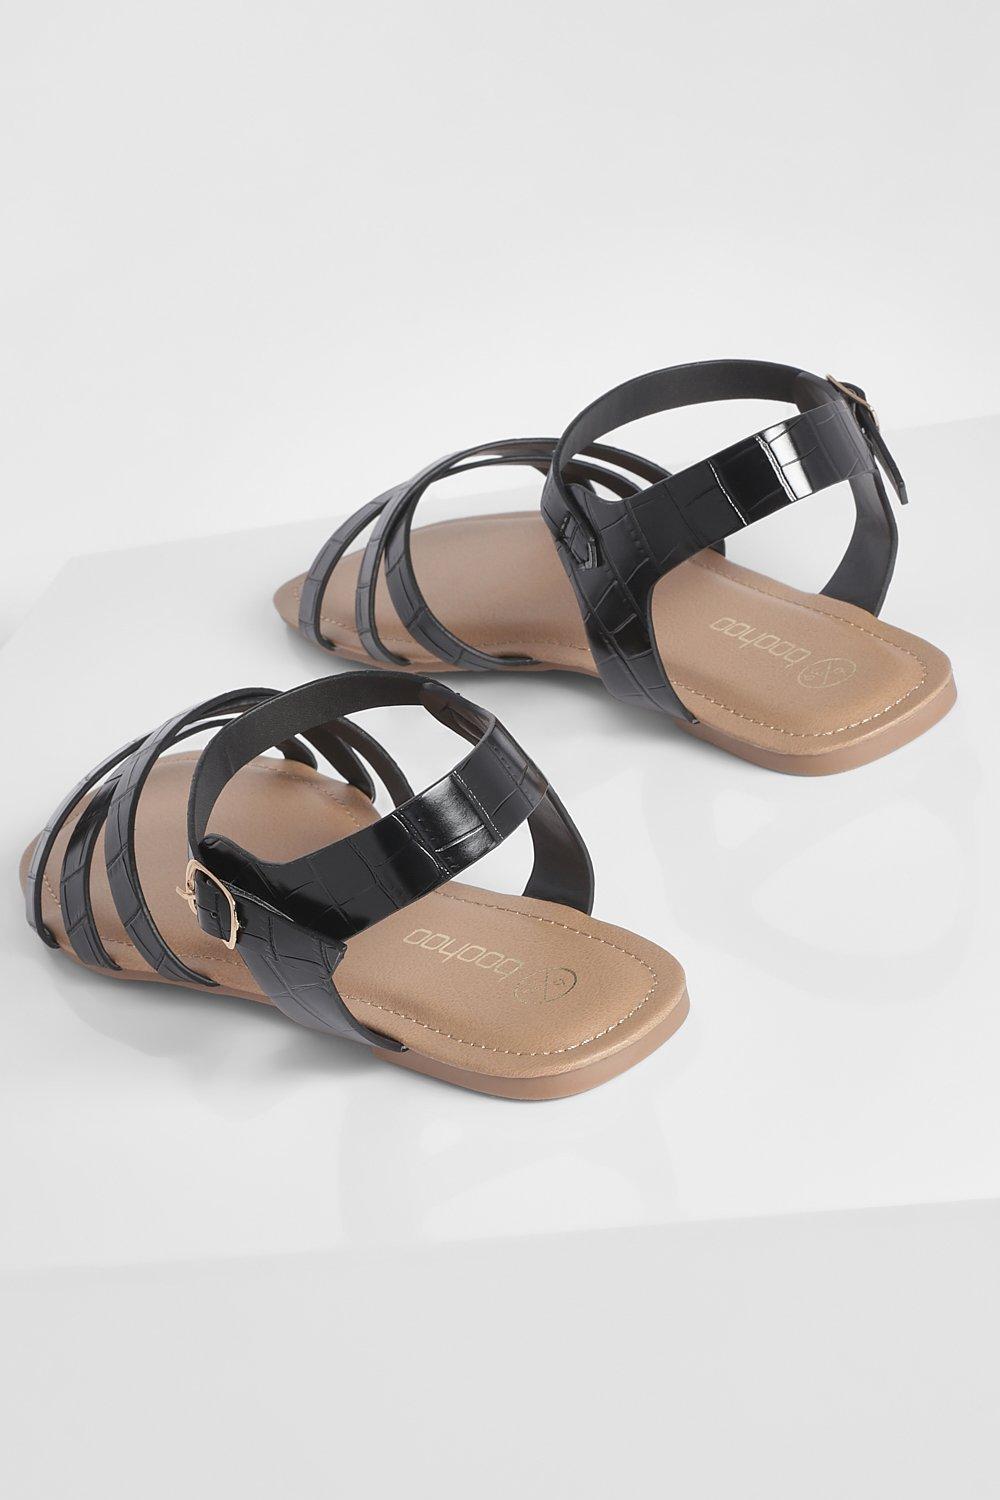 womens wide width crocs sandals